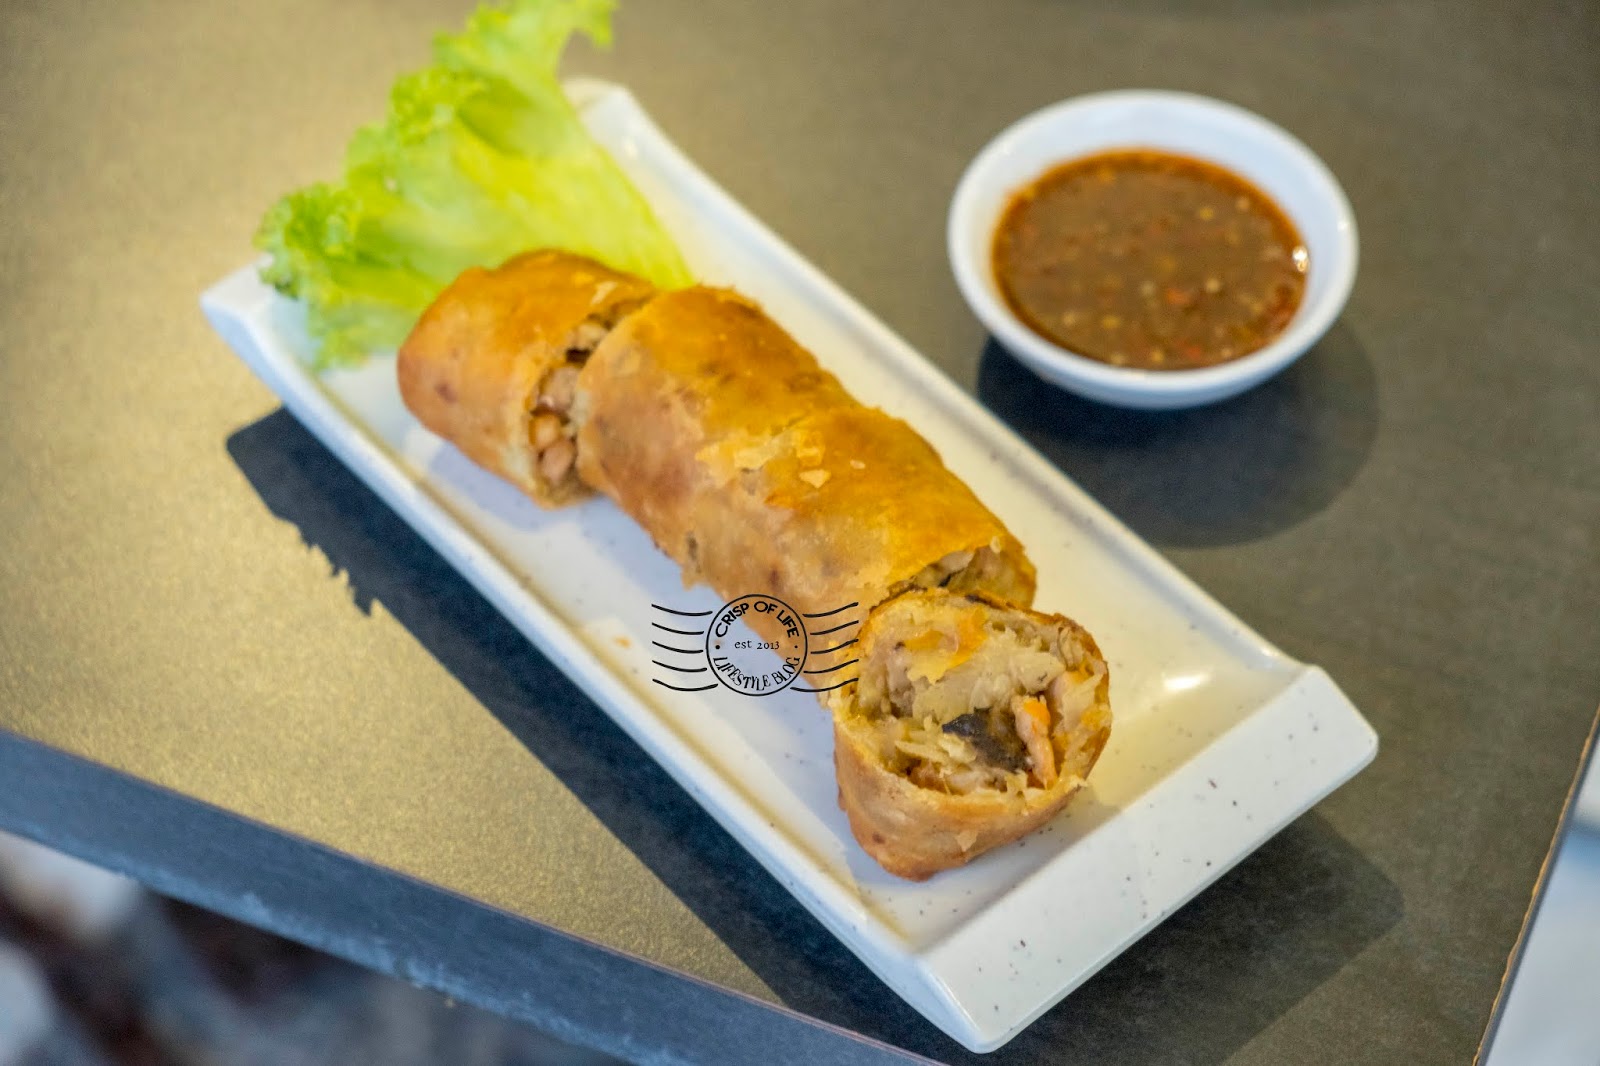 Khoon Pastry House - An Authentic Hainanese Restaurant @ Jalan Argyll, Penang